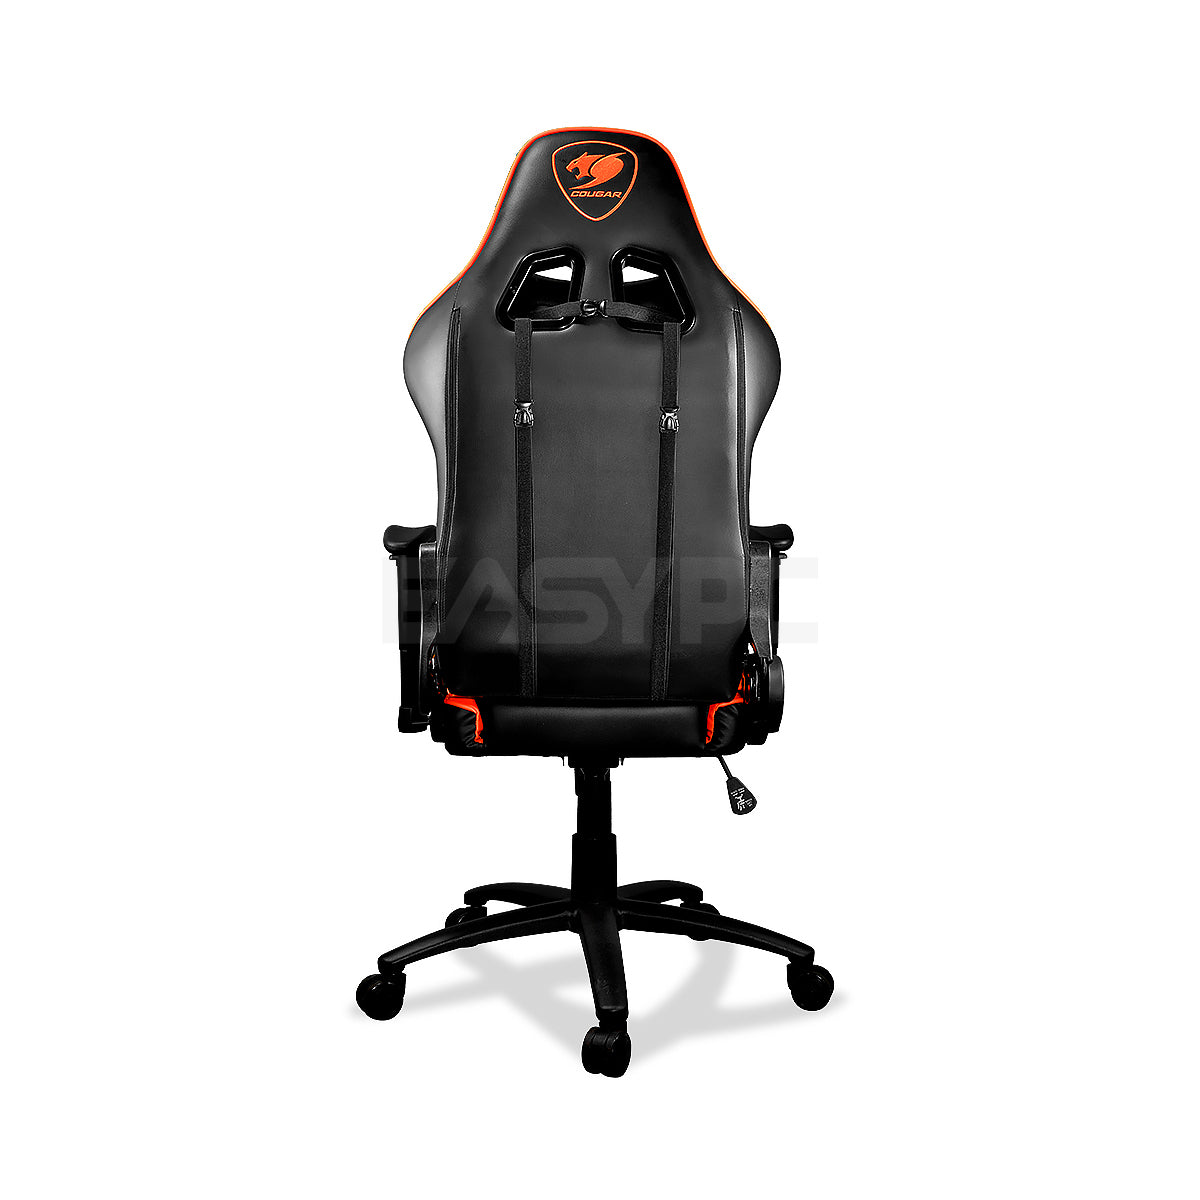 Cougar Armor One Gaming Chair Black Orange-d